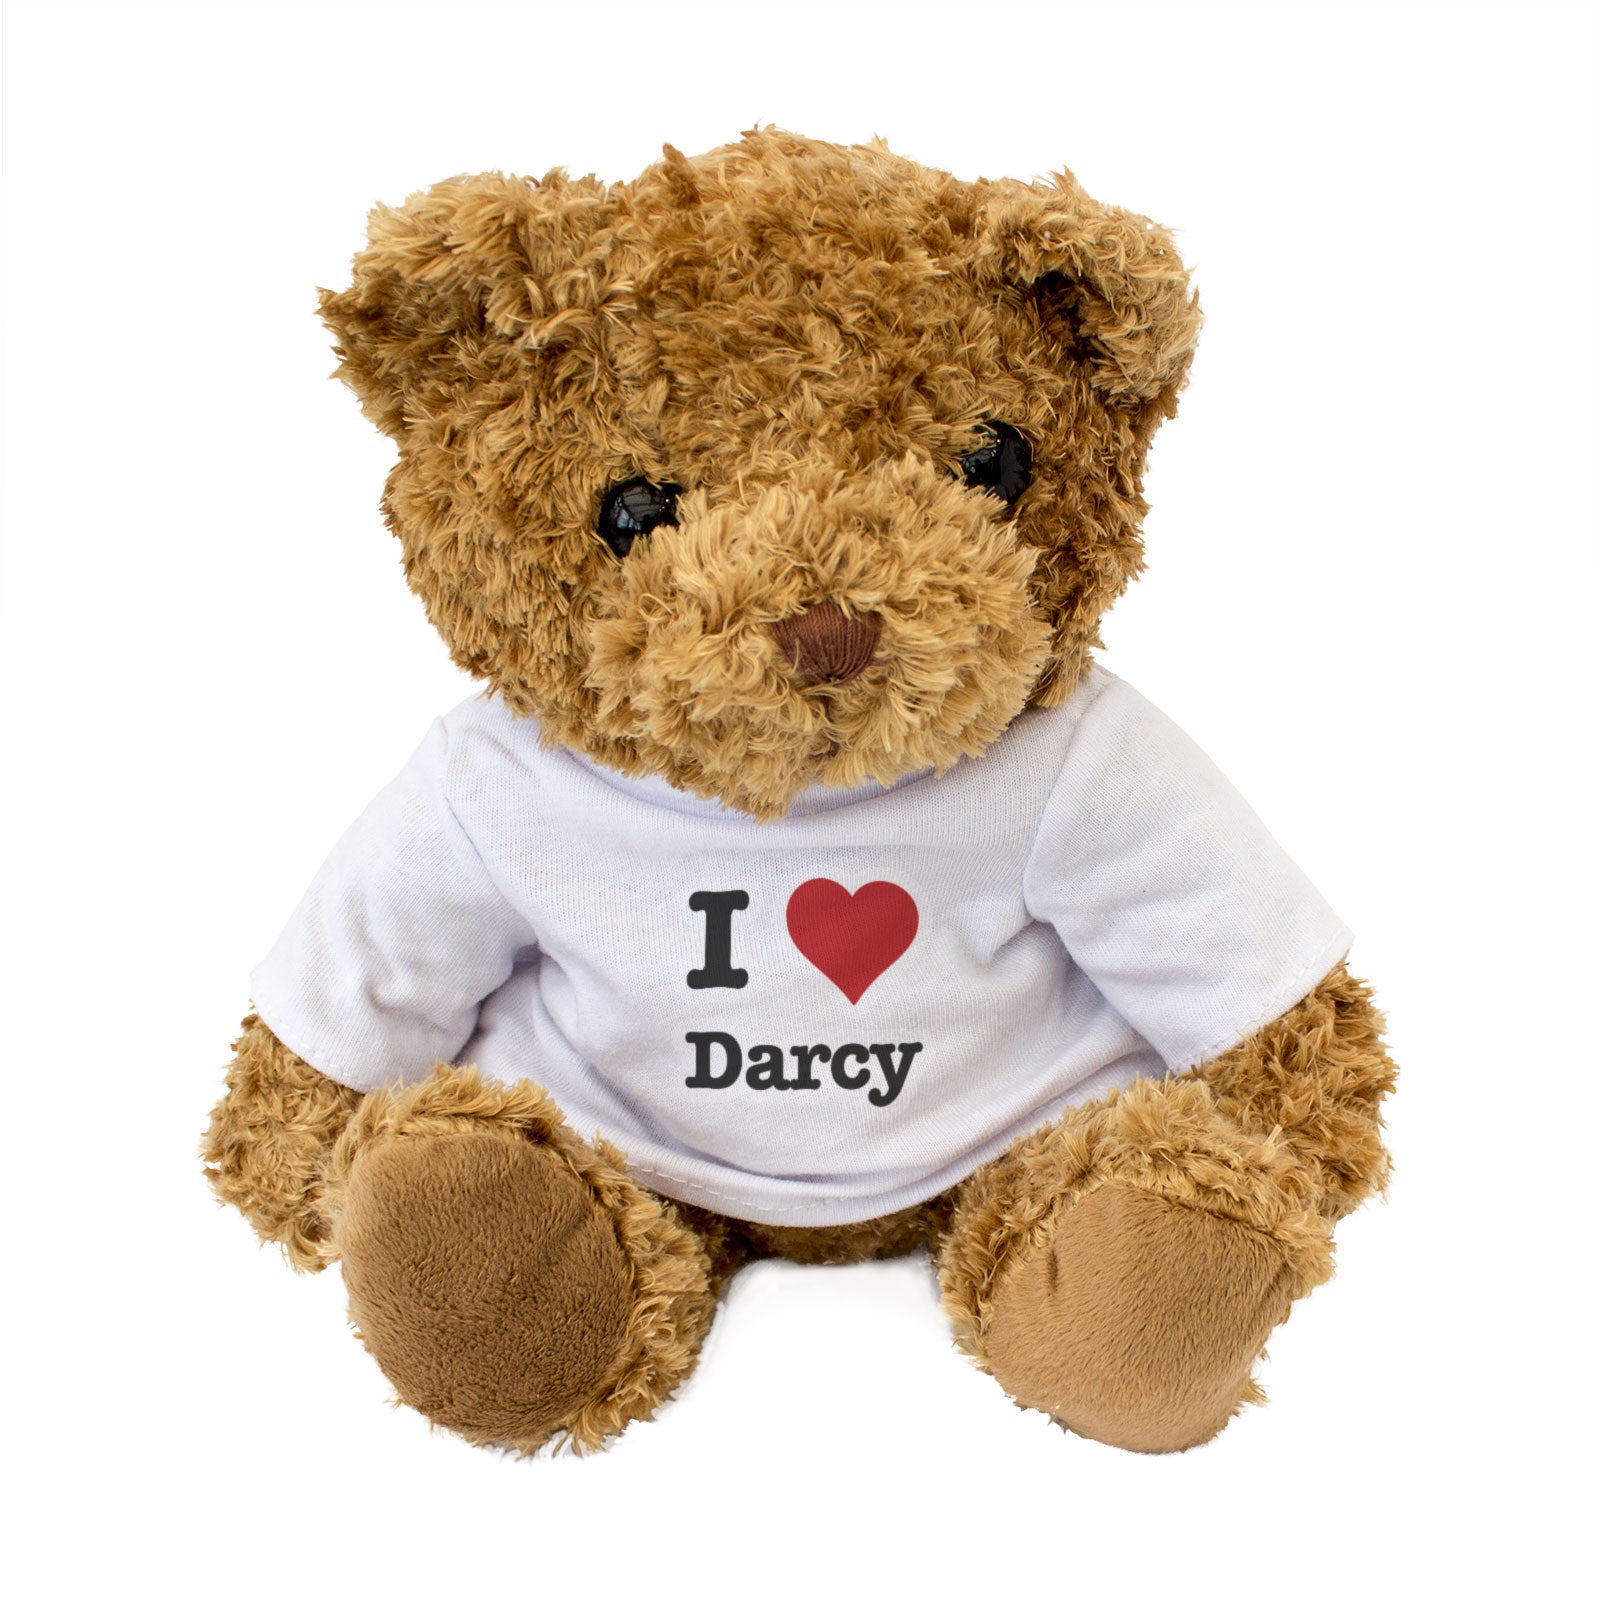 I Love Darcy - Teddy Bear